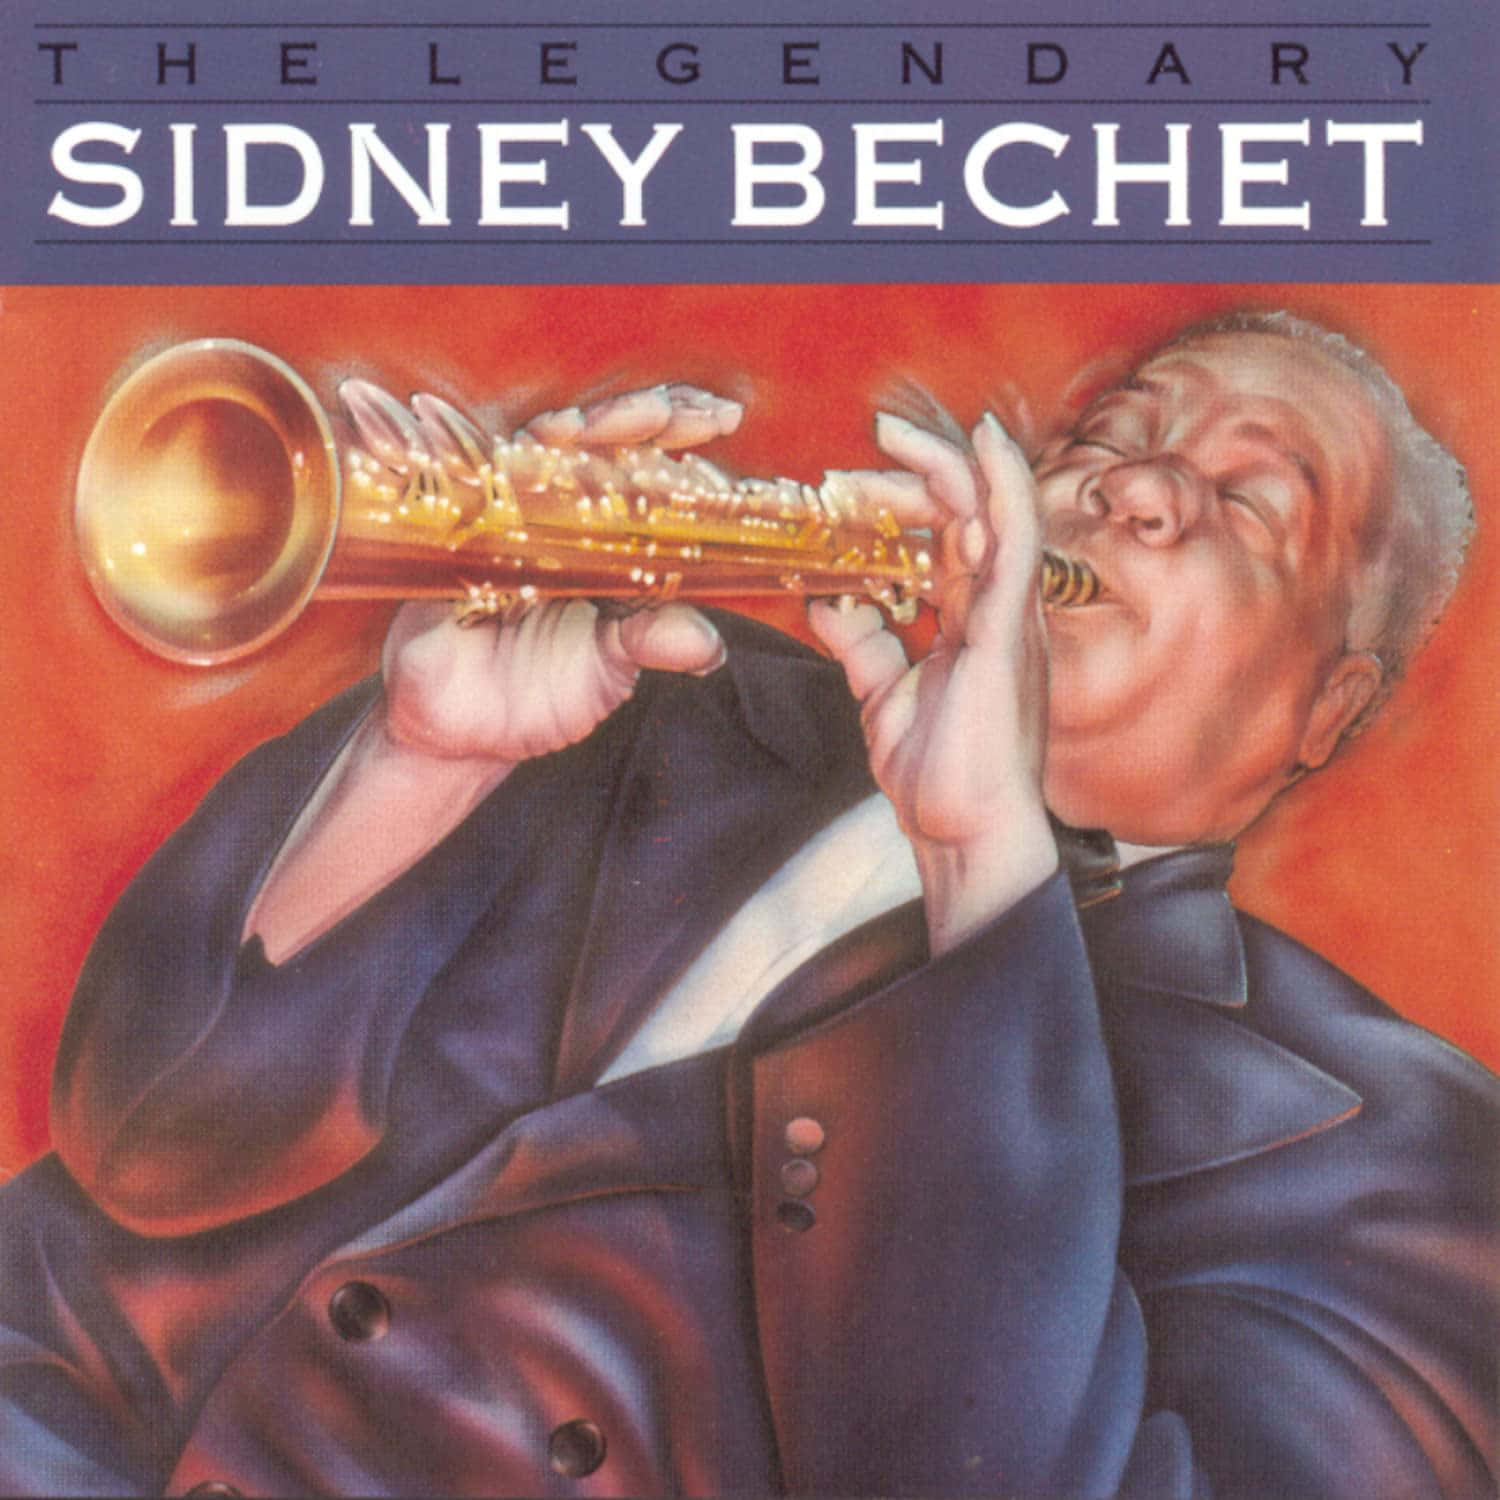 Sidney Bechet - The Legendary Jazz Musician Album Cover Wallpaper